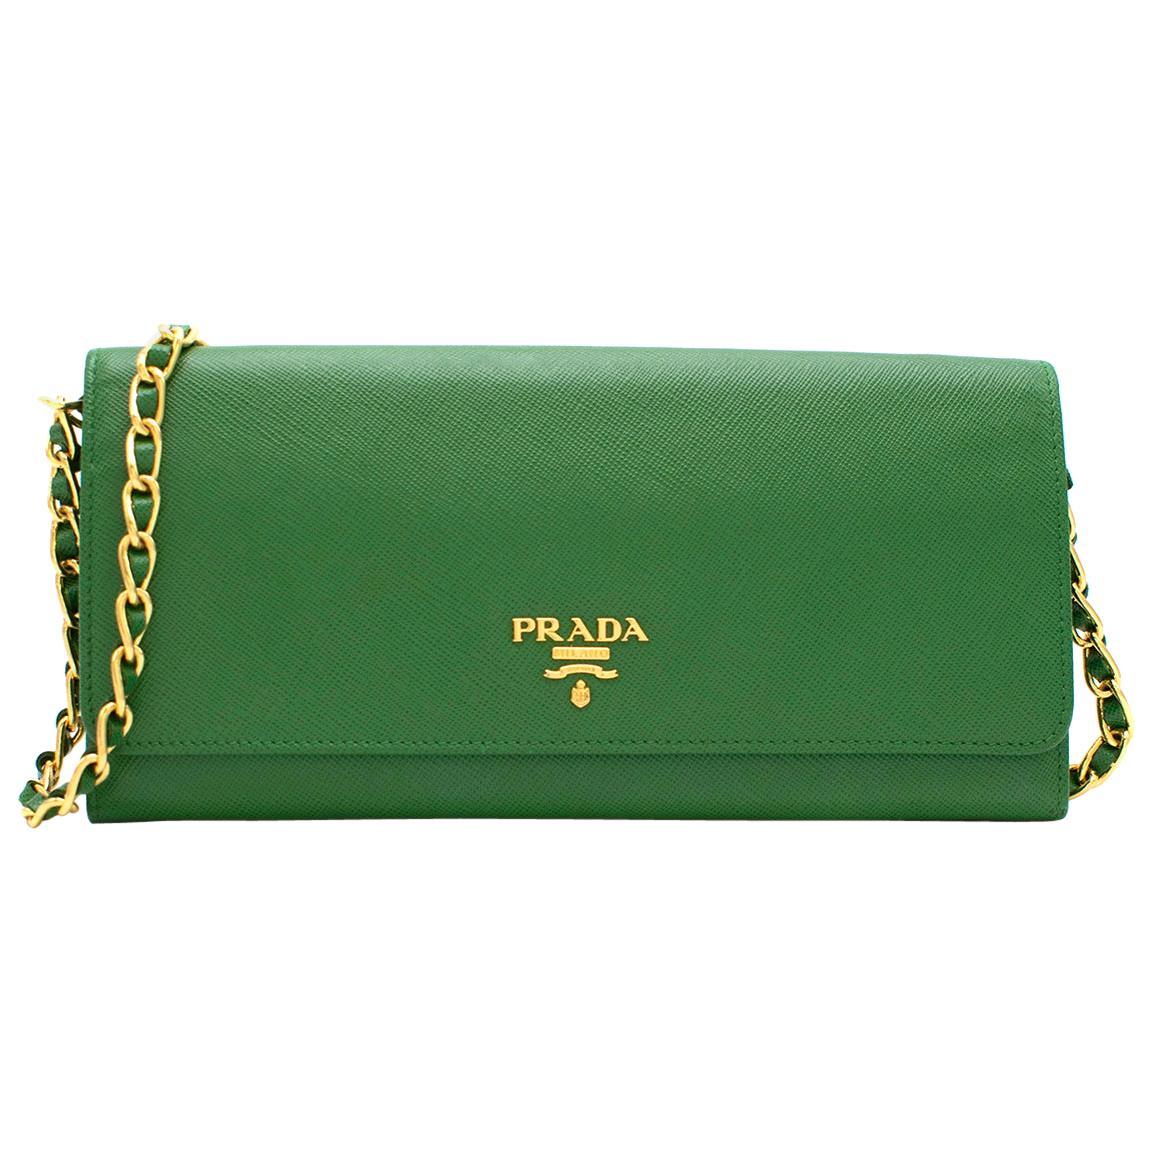 Prada Green Saffiano Leather Wallet on Chain